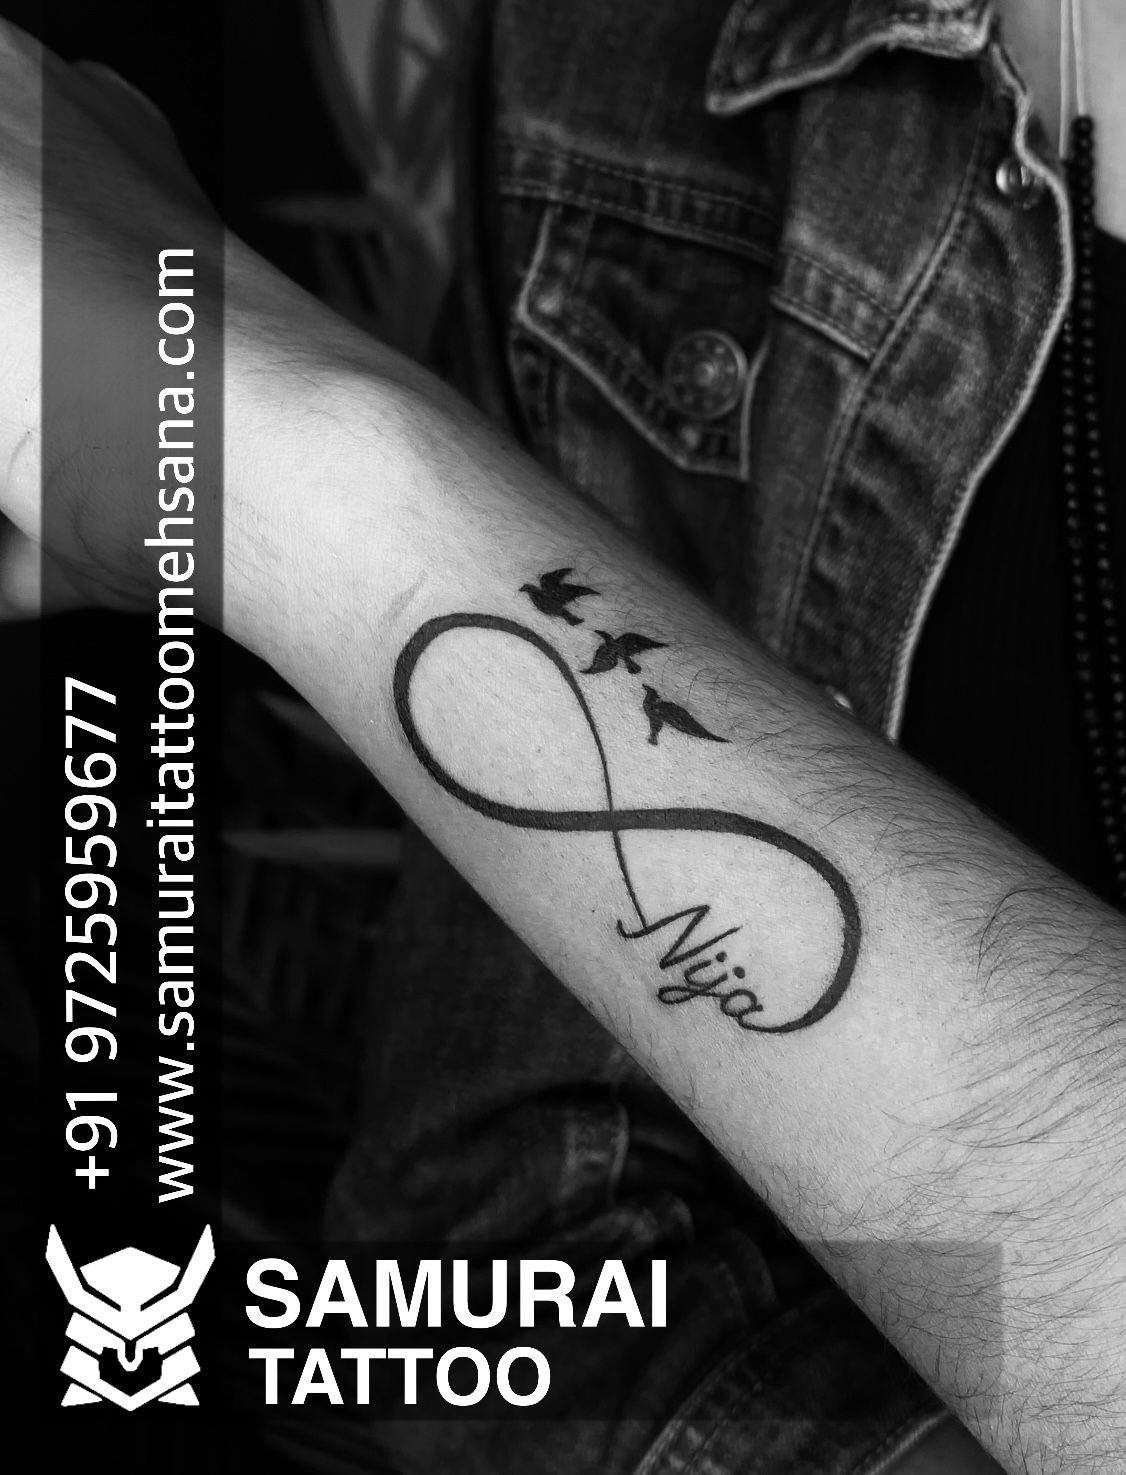 Infinitely tattoo with karma and prana text  Tattoos Infinity tattoo  Fish tattoos